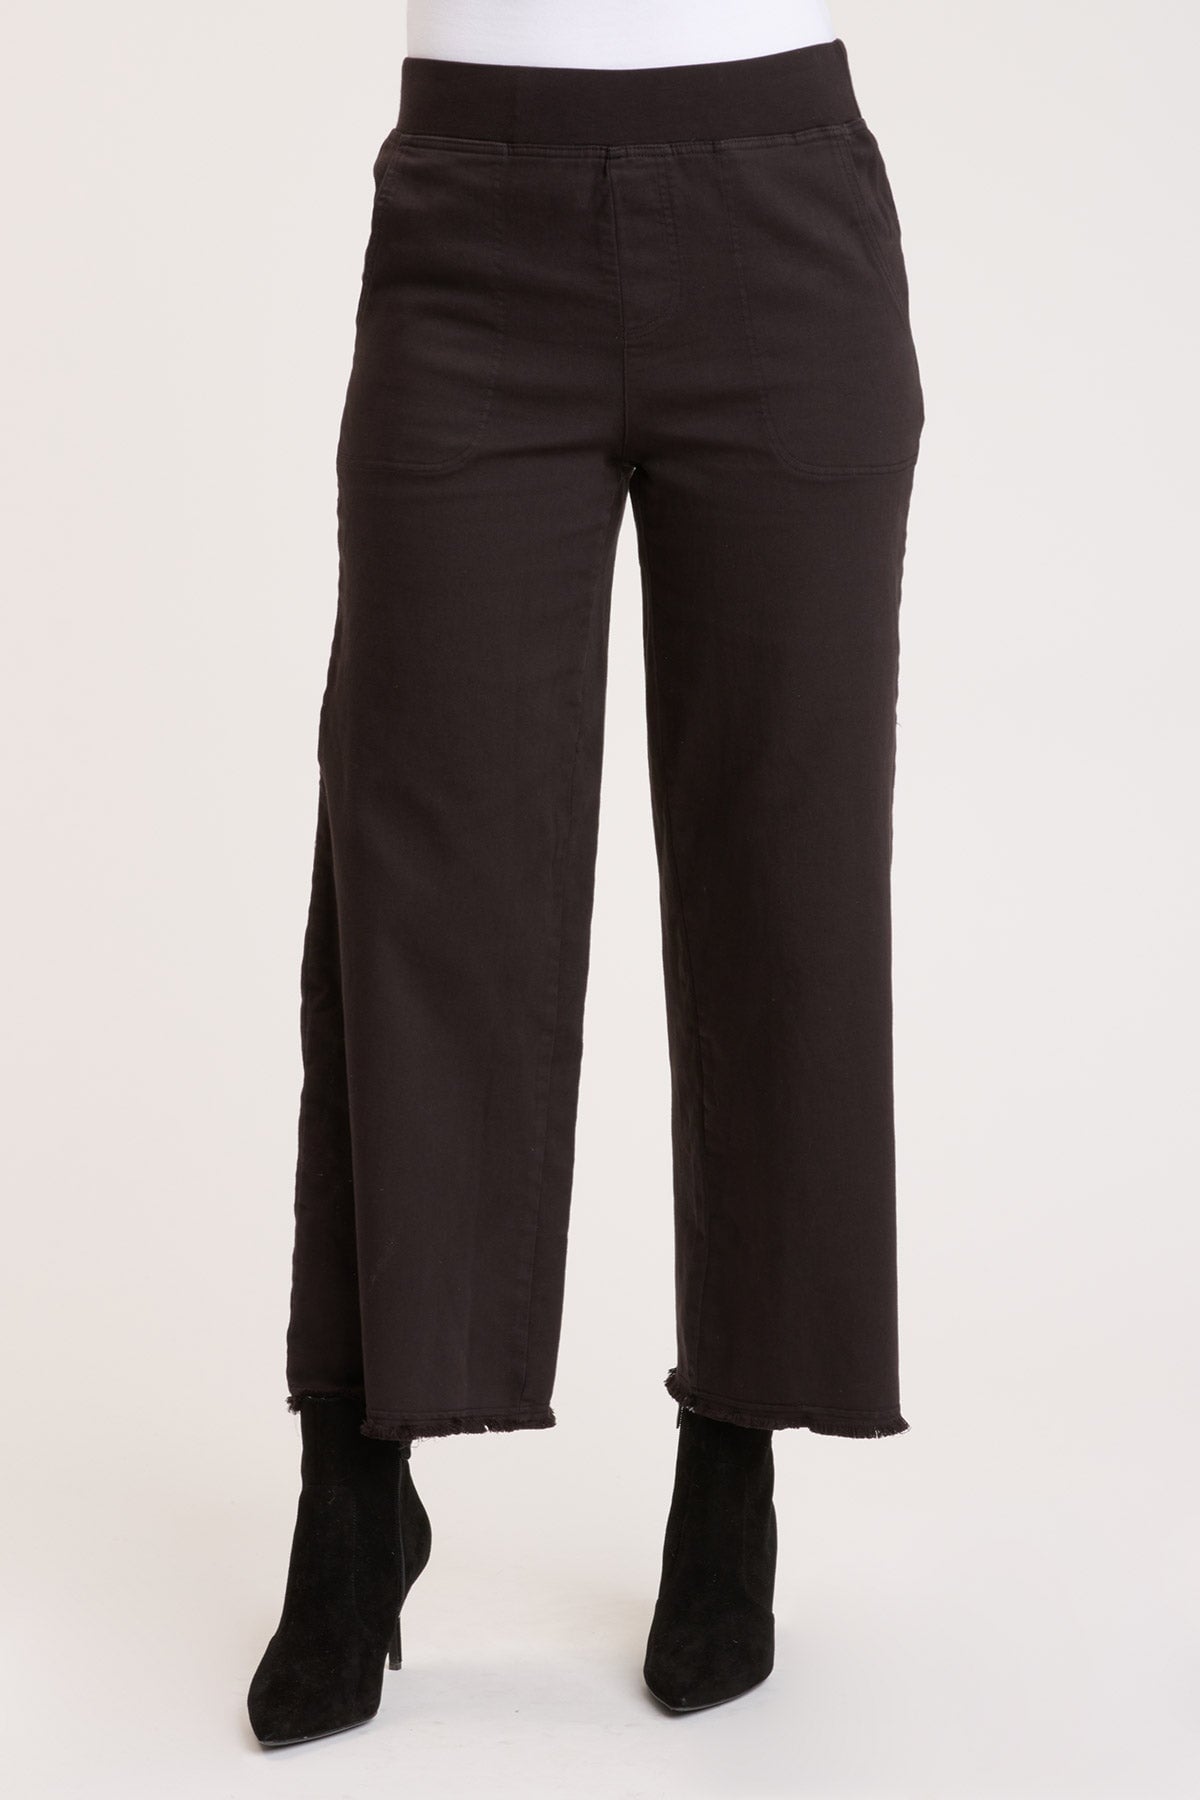 Vince Size M Black Polyester Spandex Elastic Waist Front Pockets